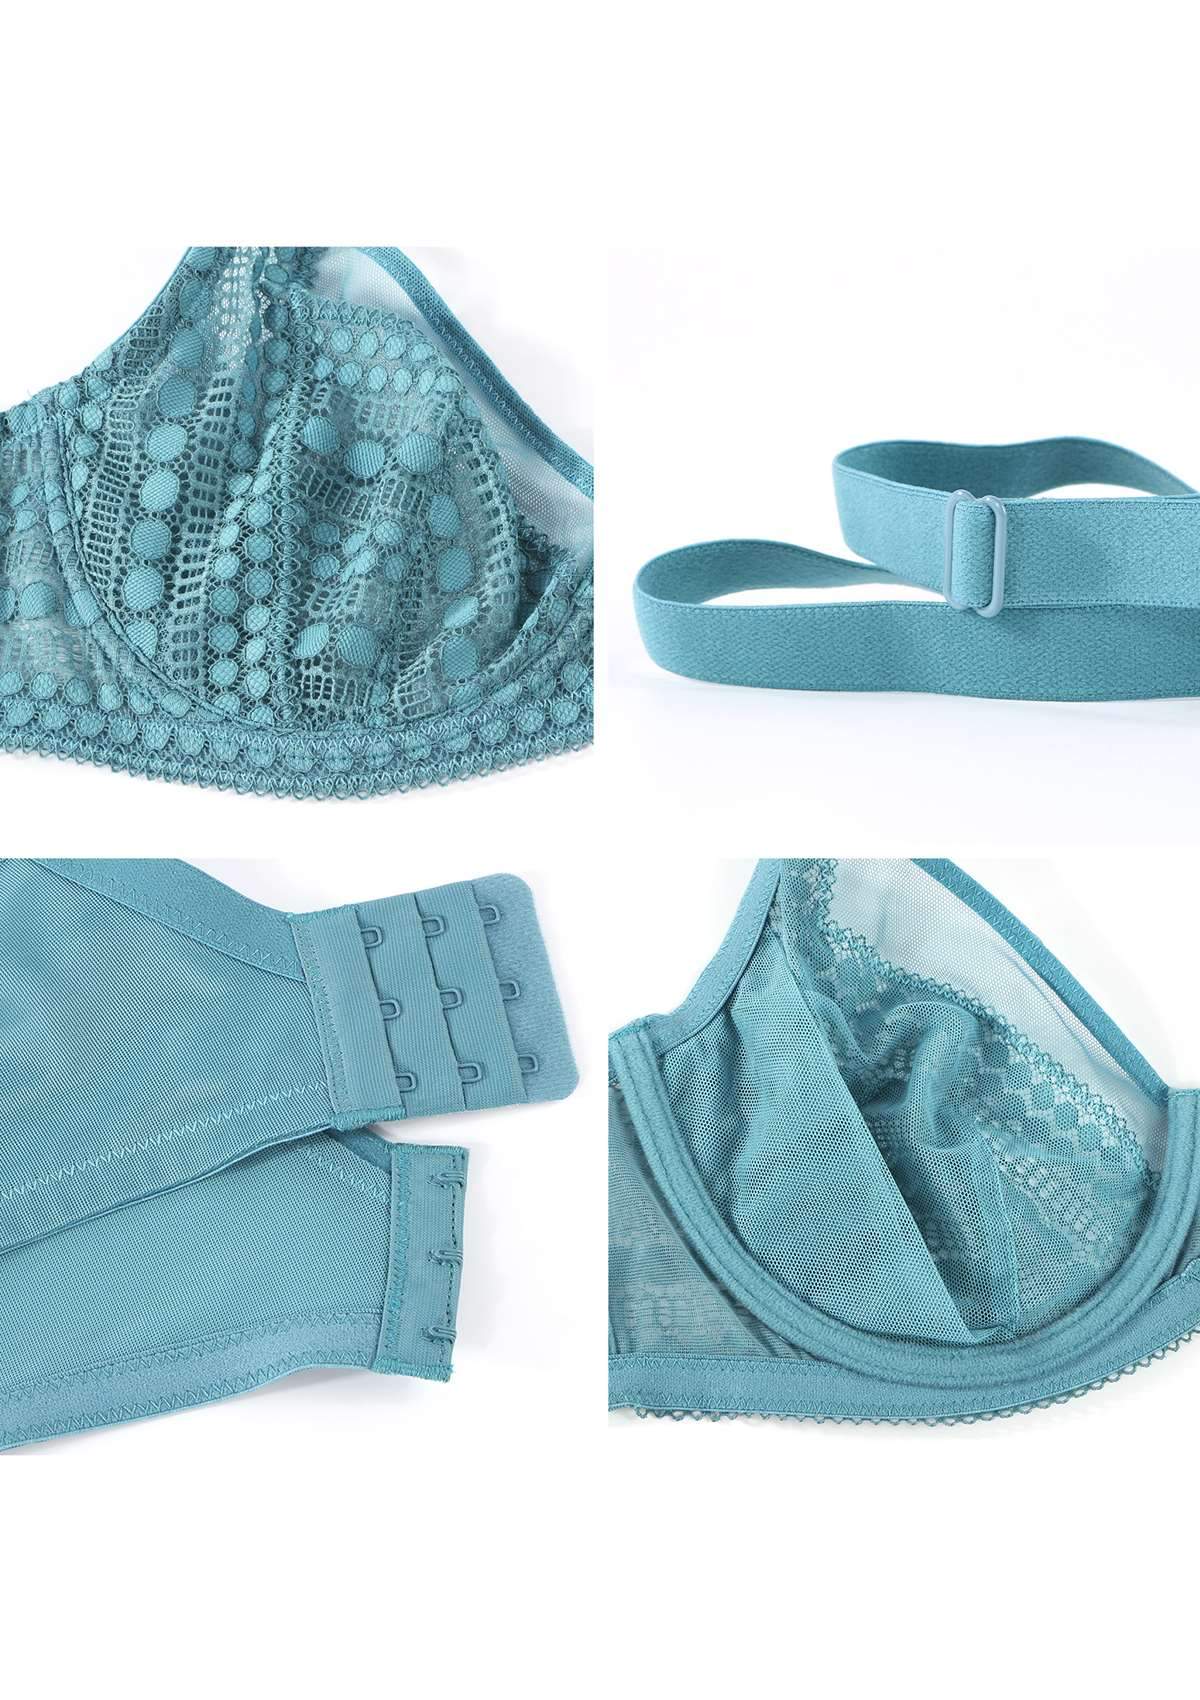 HSIA Heroine Matching Bra And Underwear Set: Bra For Big Boobs - Brittany Blue / 36 / DDD/F